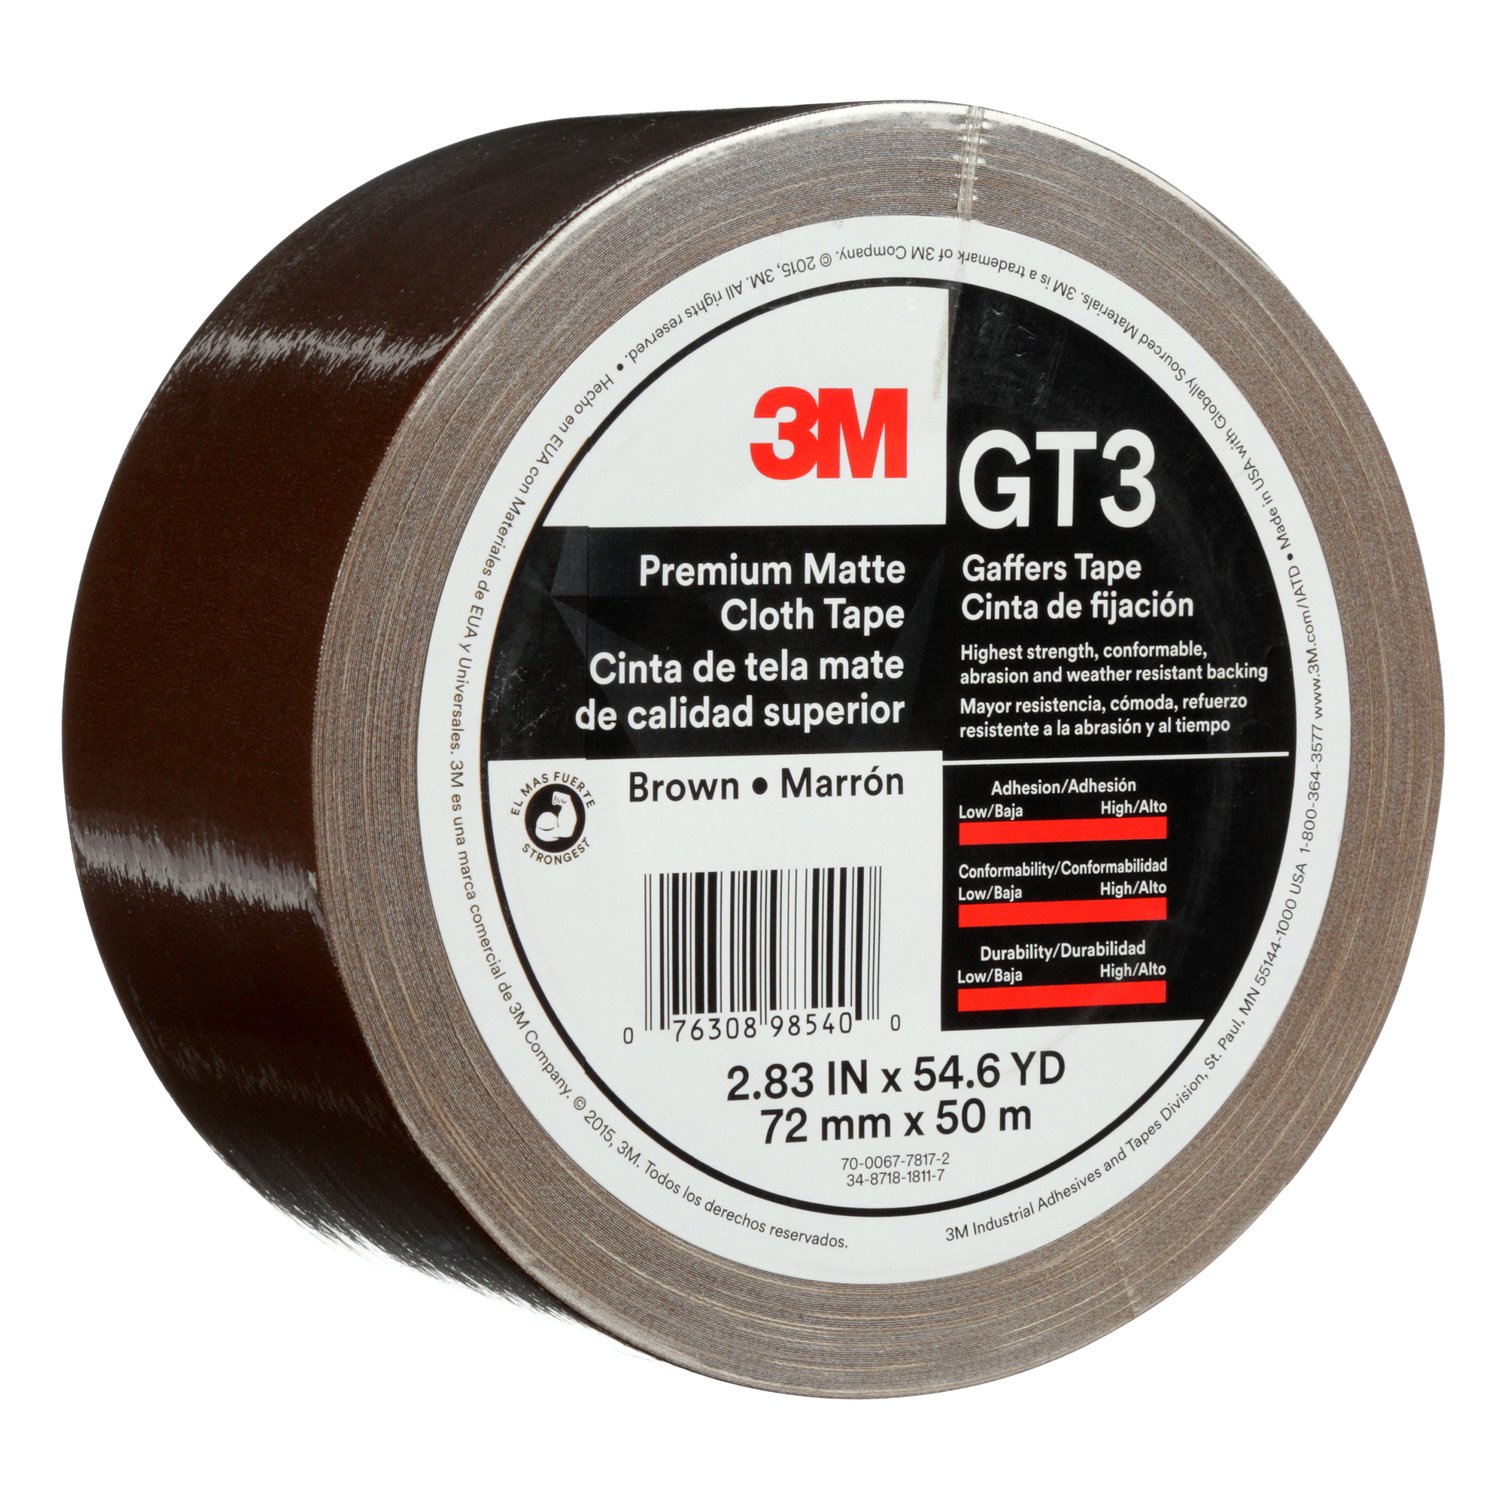 7010336139 - 3M Premium Matte Cloth (Gaffers) Tape GT3, Brown, 72 mm x 50 m, 11 mil,
16/Case